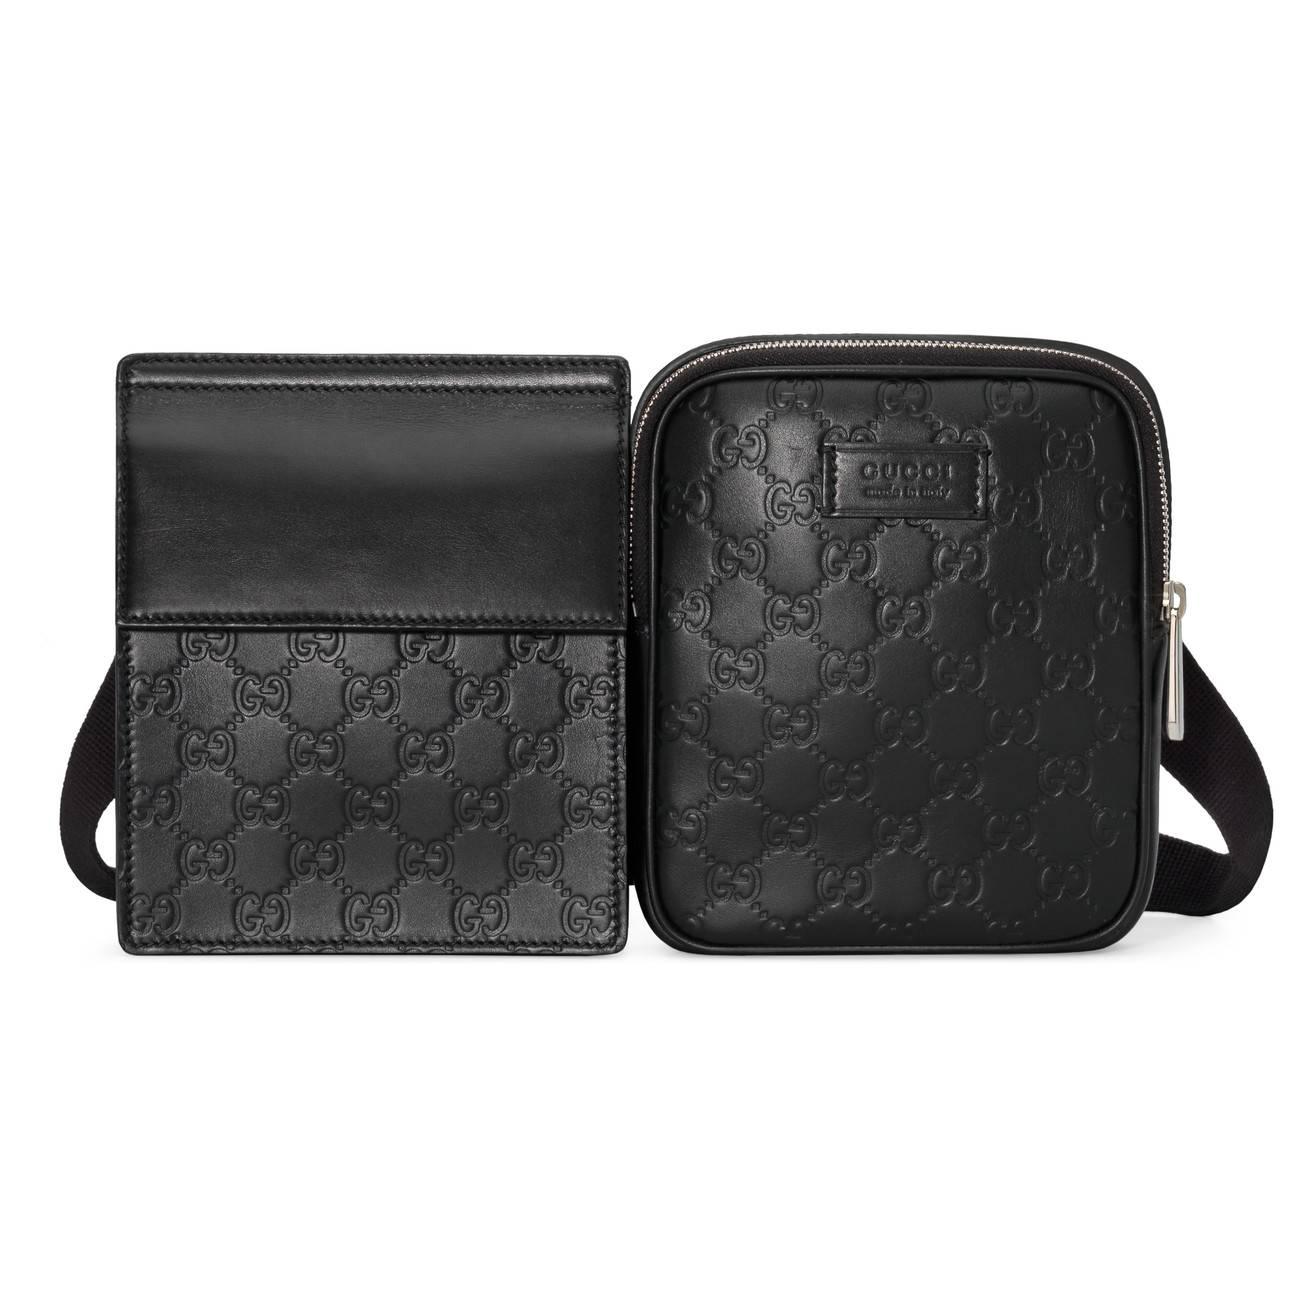 Gucci Leather Signature Belt Bag in Black for Men - Lyst